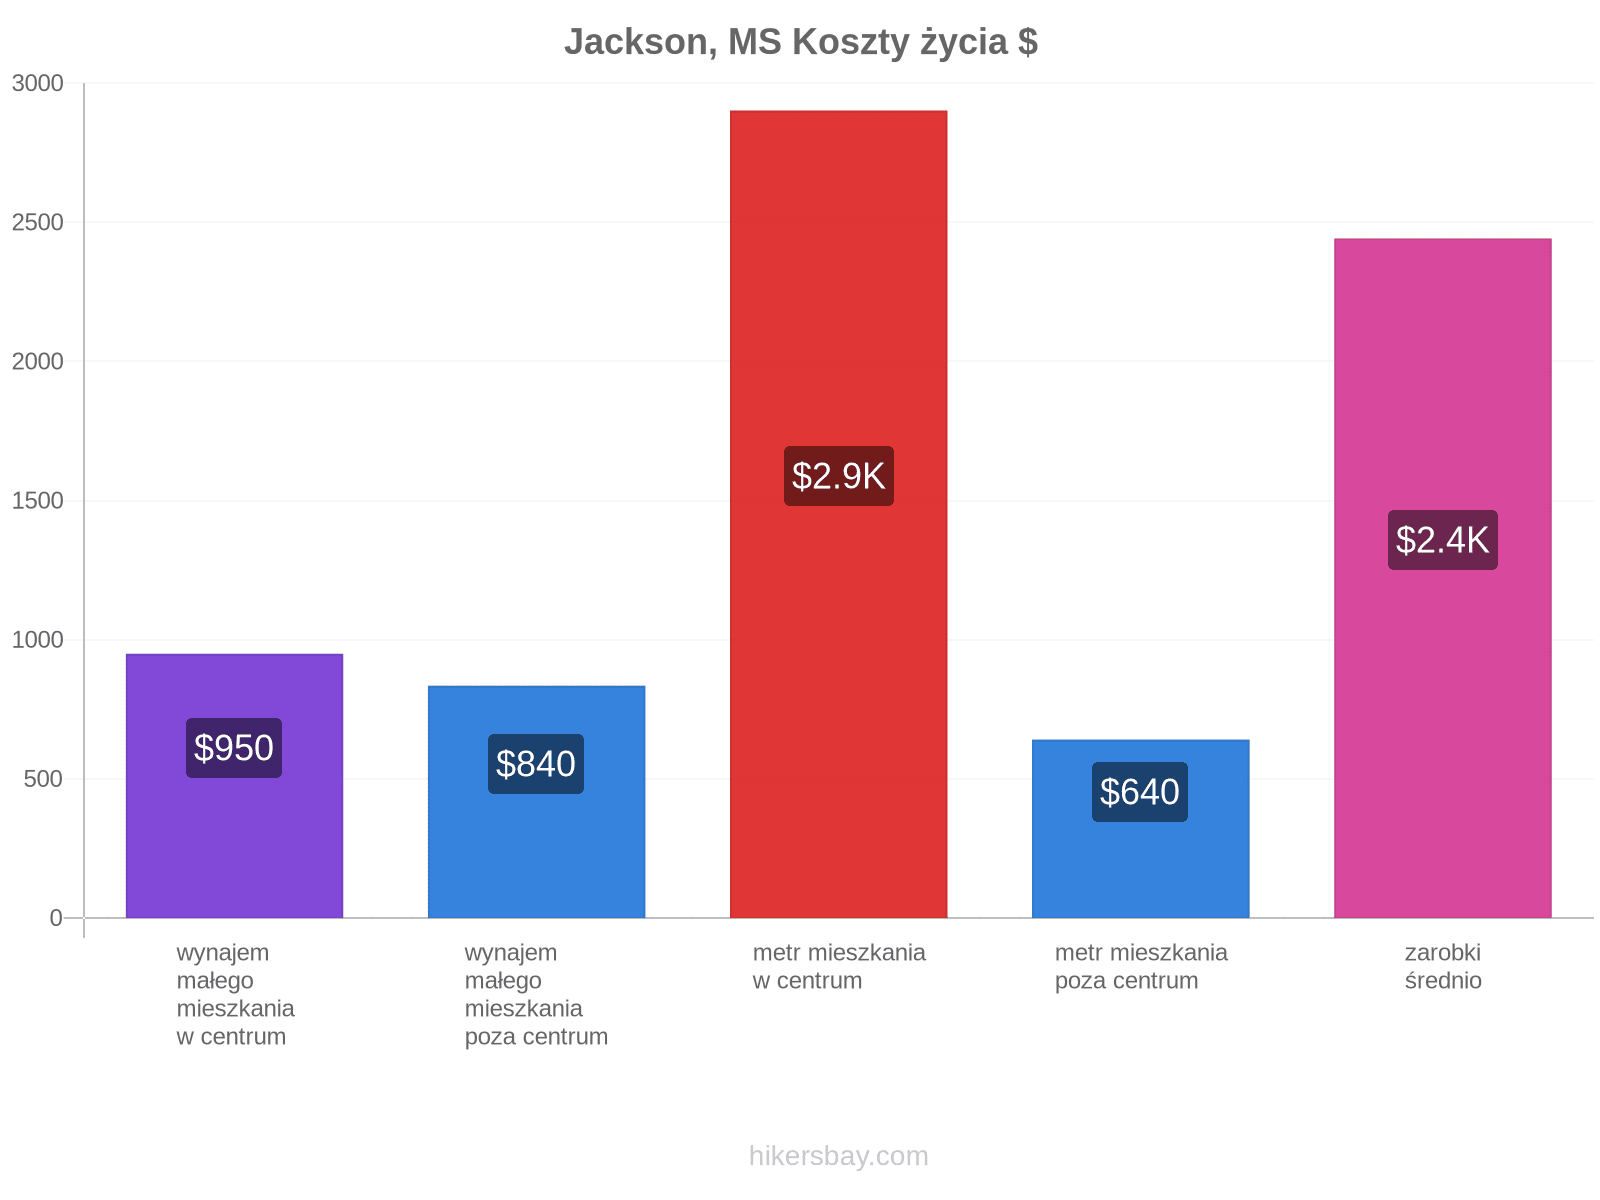 Jackson, MS koszty życia hikersbay.com